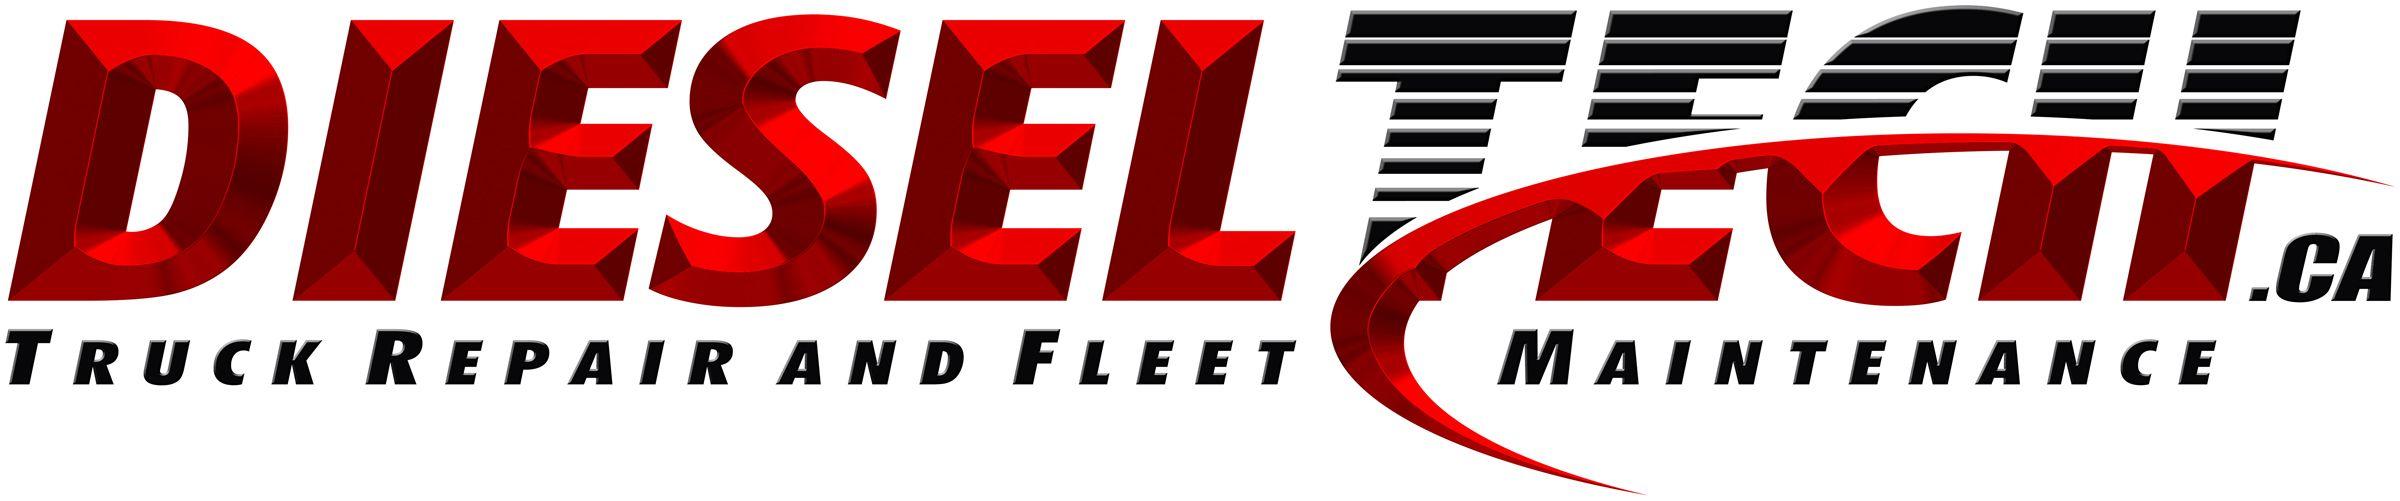 Diesel Mechanic Logo - Picture of Diesel Mechanic Logo